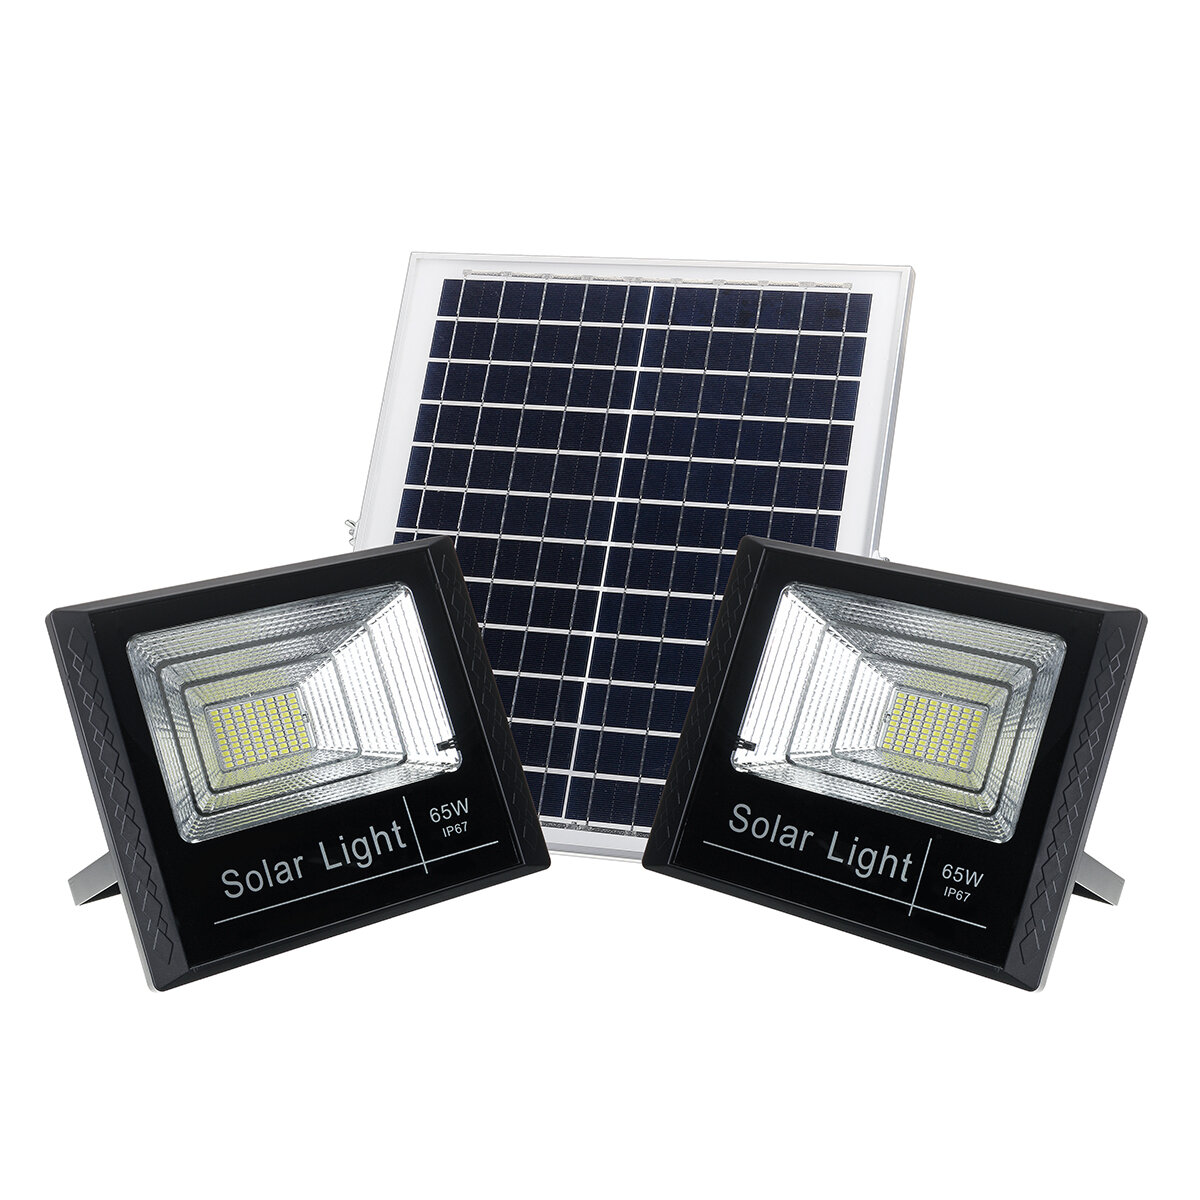 Image of 10W 25W 45W 65W Solar Panel with 2 Wall Lights Waterproof Remote Control Flood Light Park Yard Garden Driveway